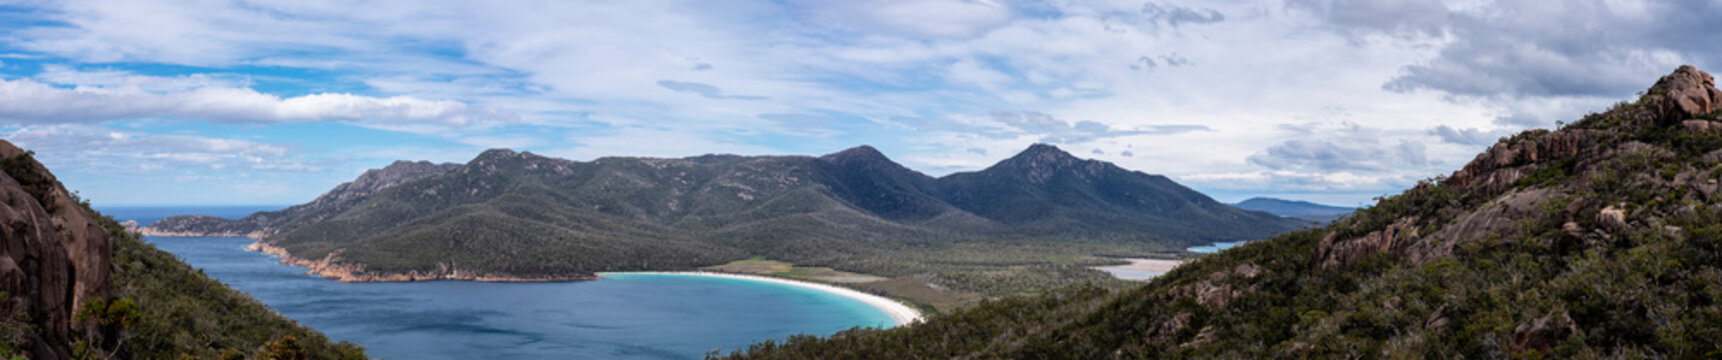 Freycinet National Park - Wineglass Bay Lookout Panorama. Tasmania.